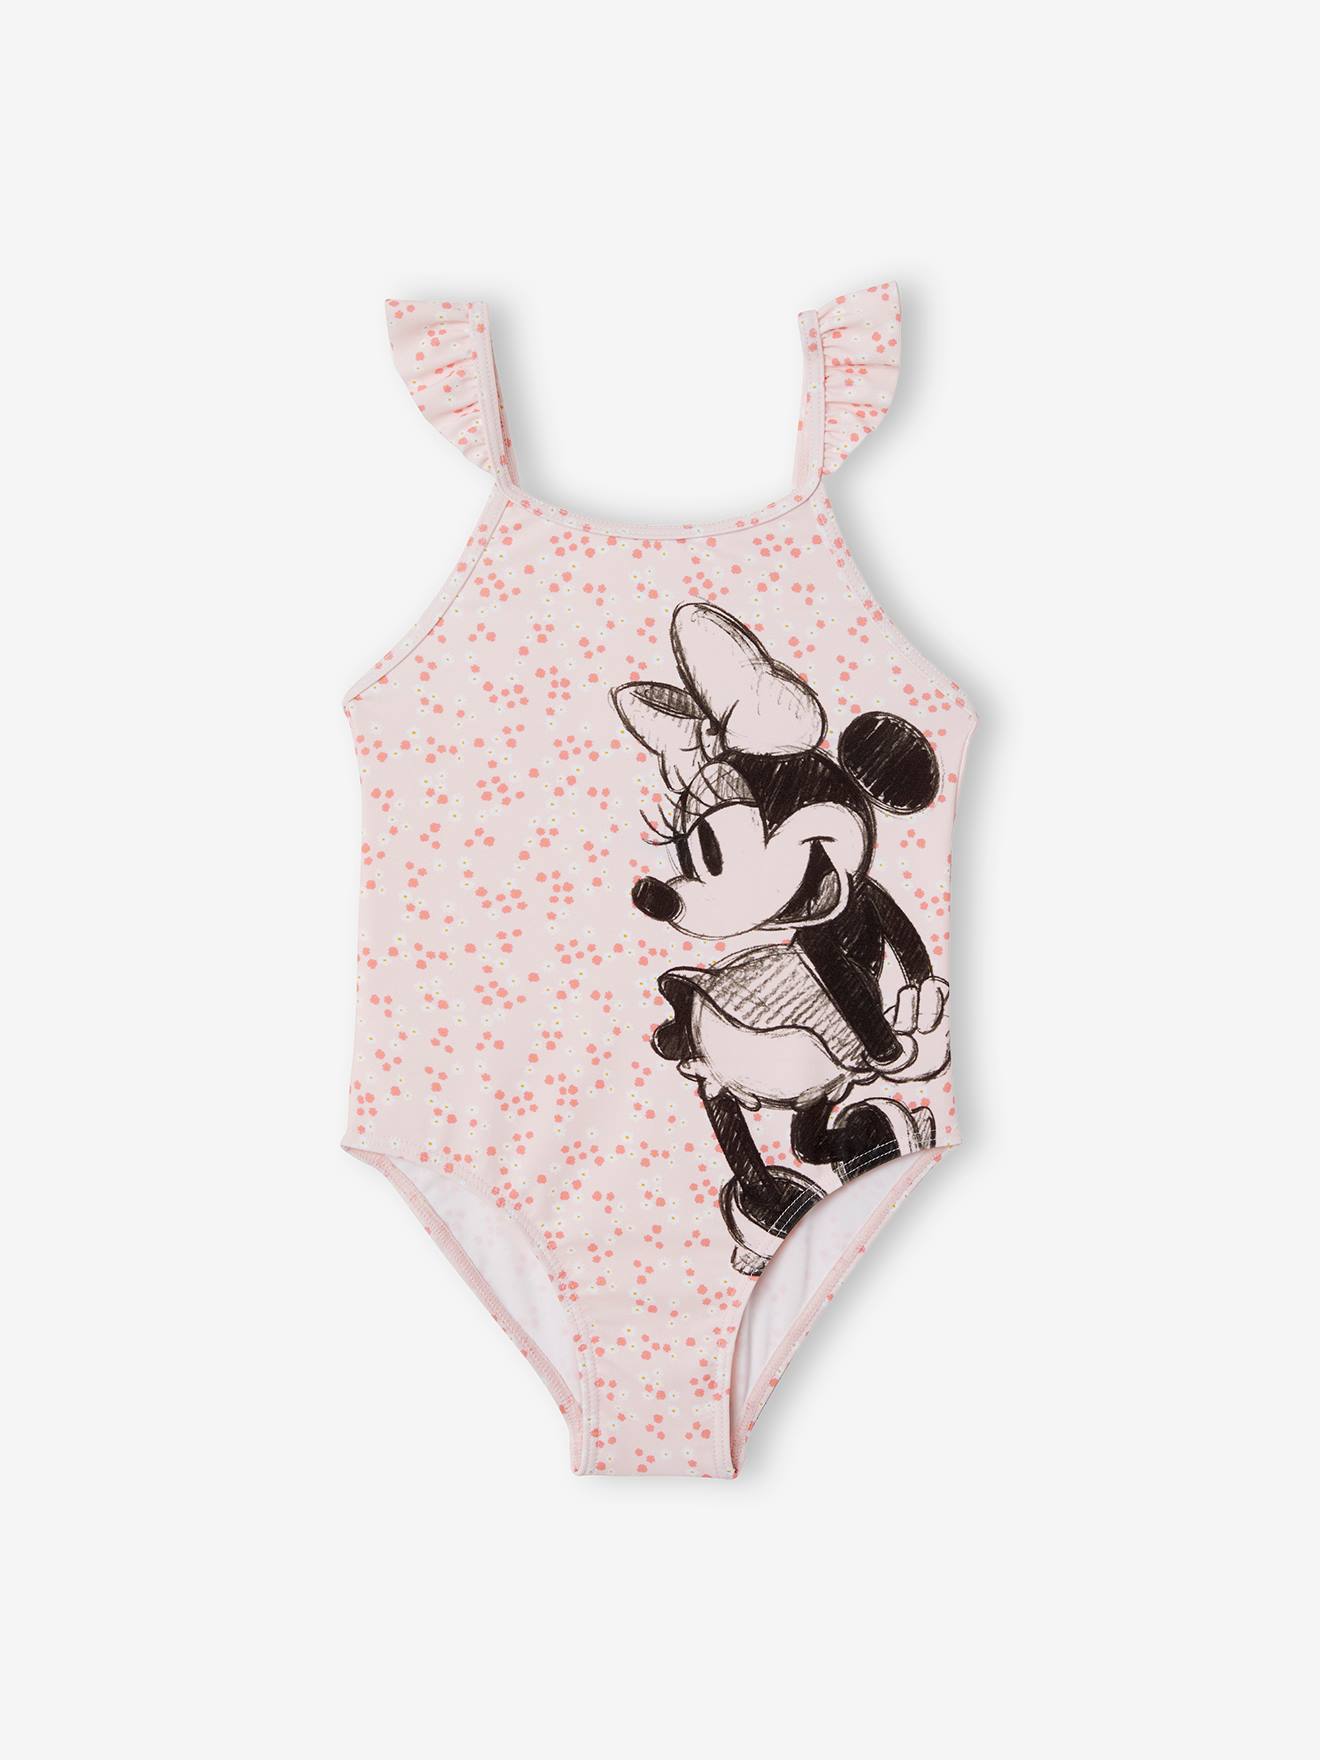 Disney Minnie Mouse Swim Suit Baby Girl Pink Swimming Costume Beachwear